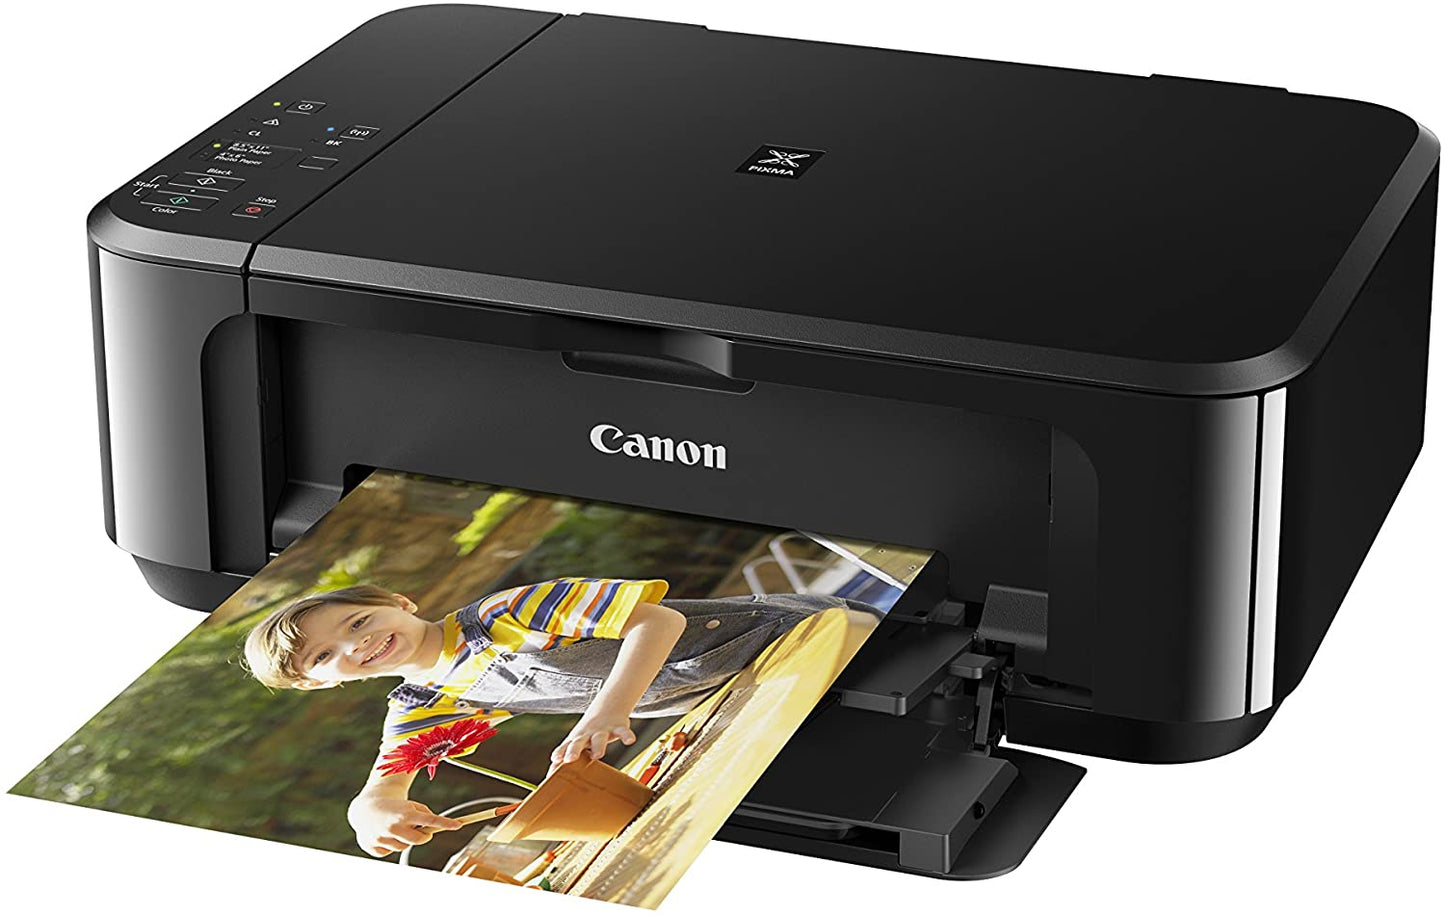 Canon Pixma Mg3620 Wireless All-In-One Inkjet Printer